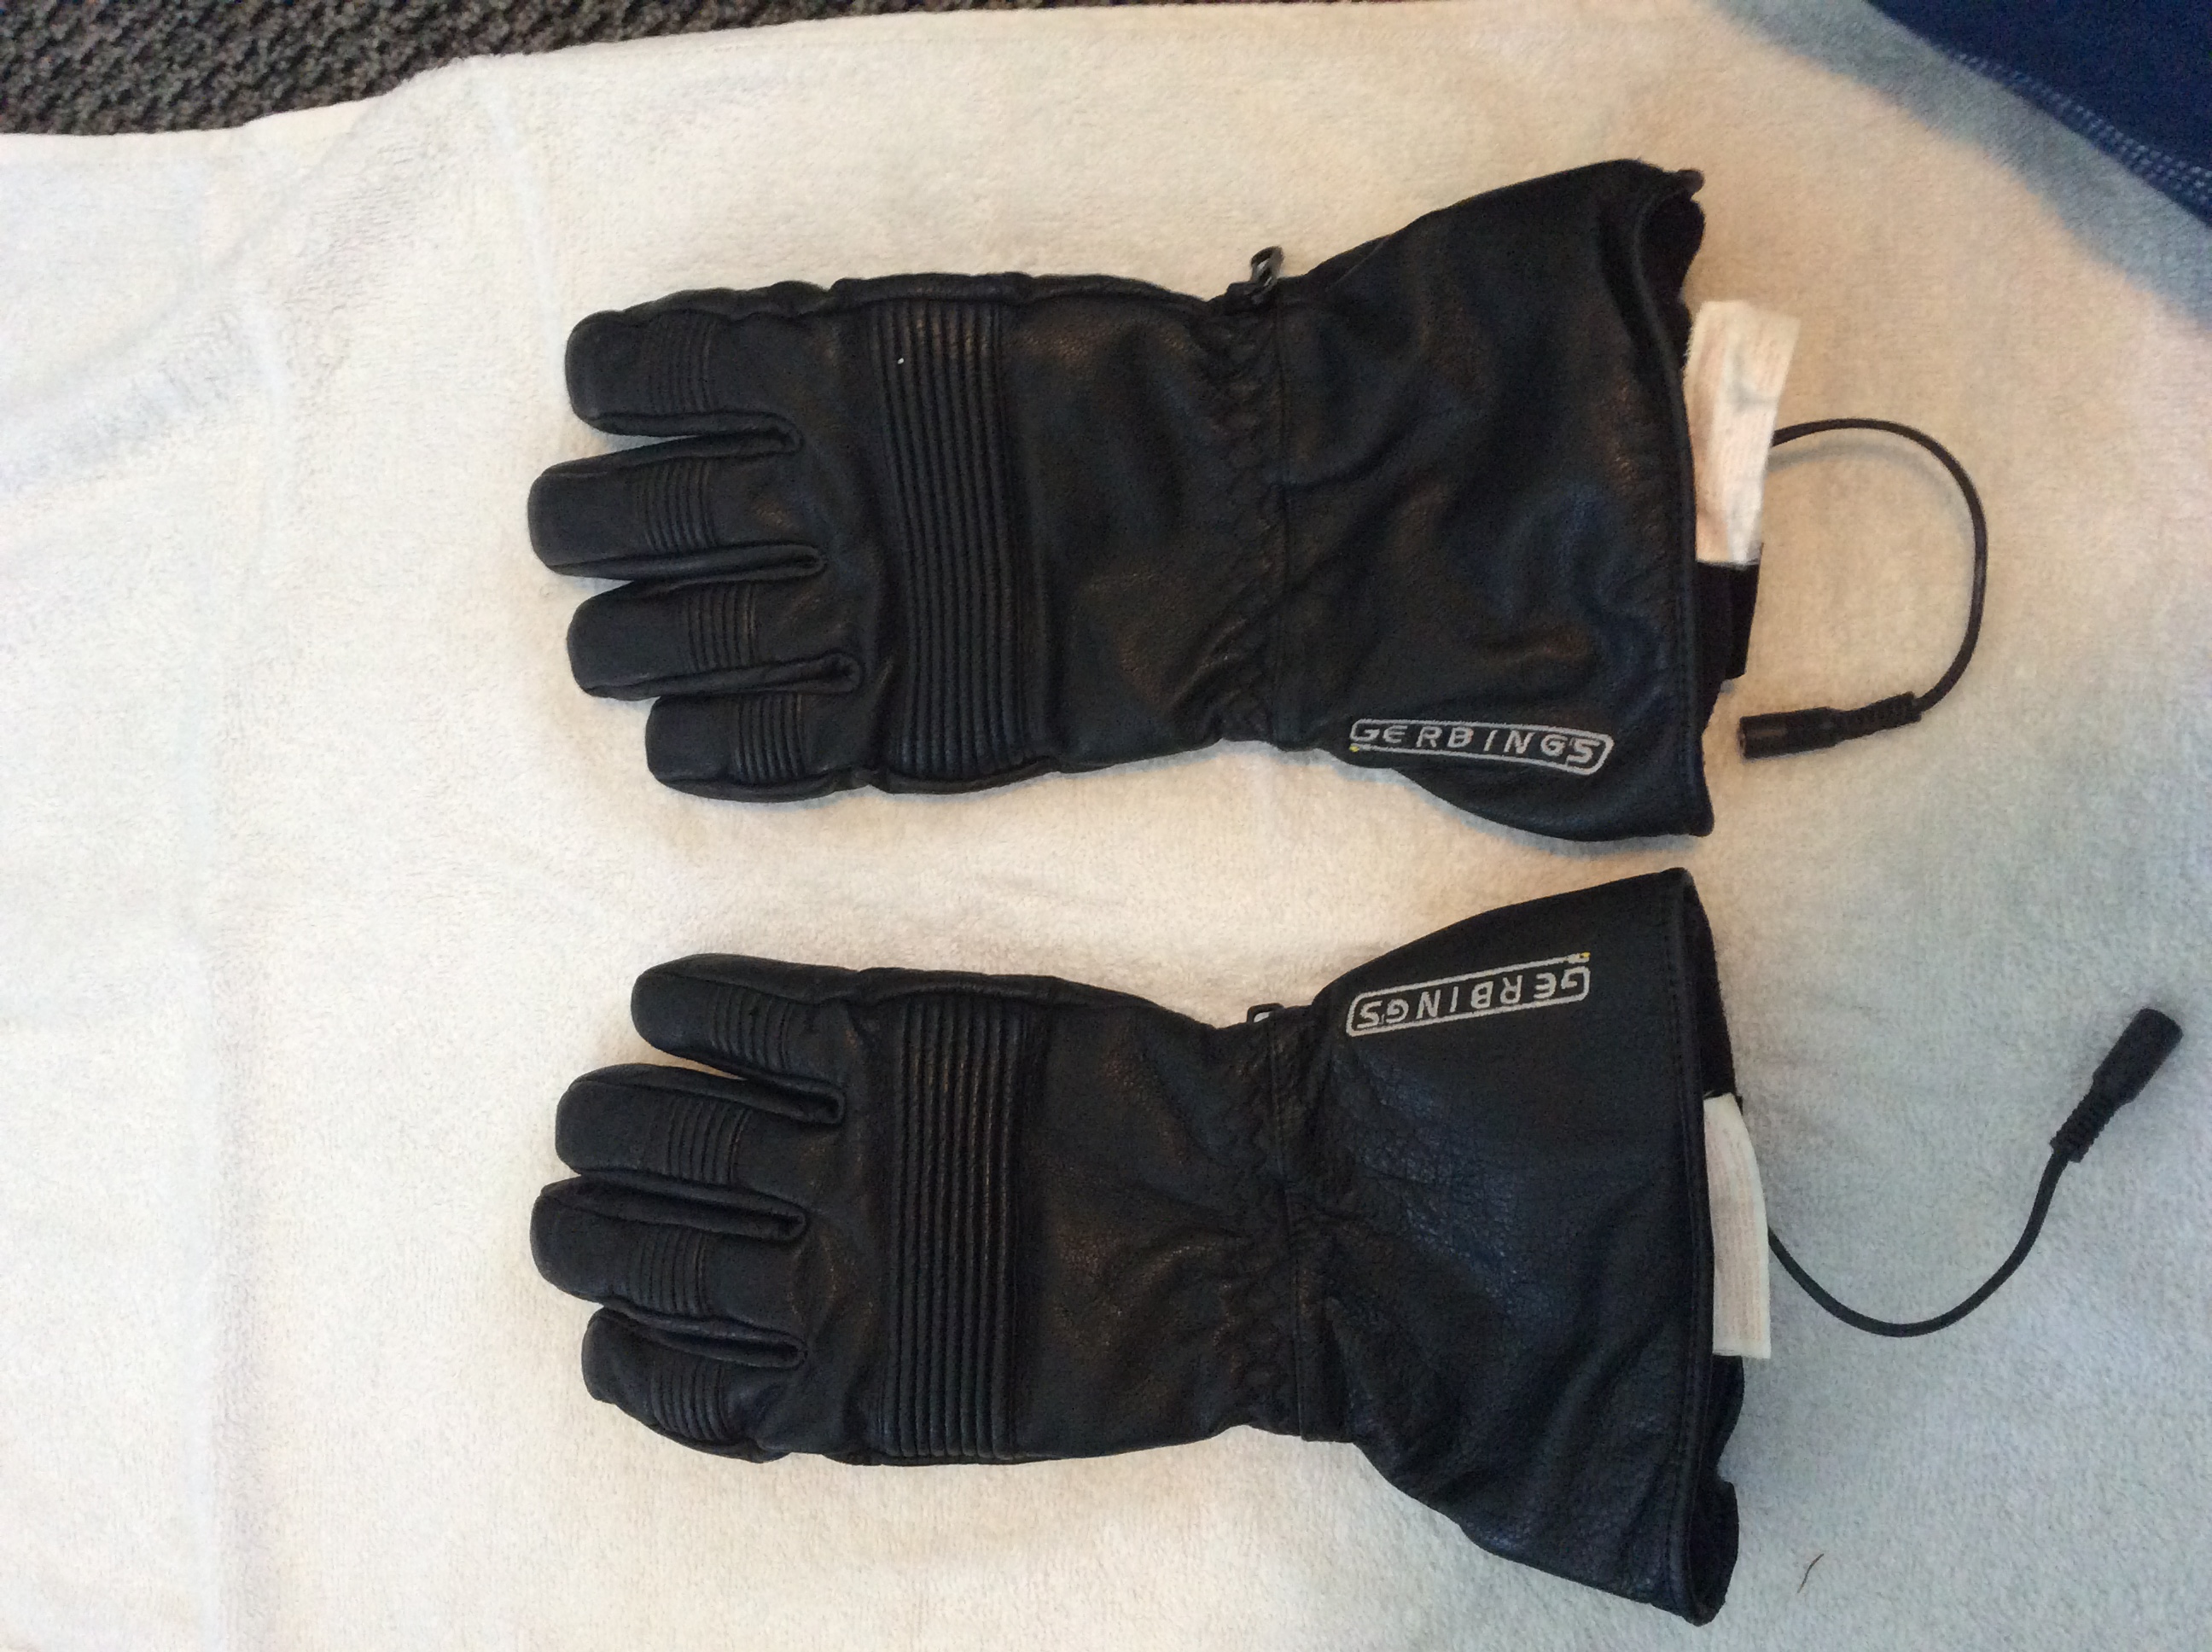 Gerbings xxl gloves for sale $80 - Harley Davidson Forums